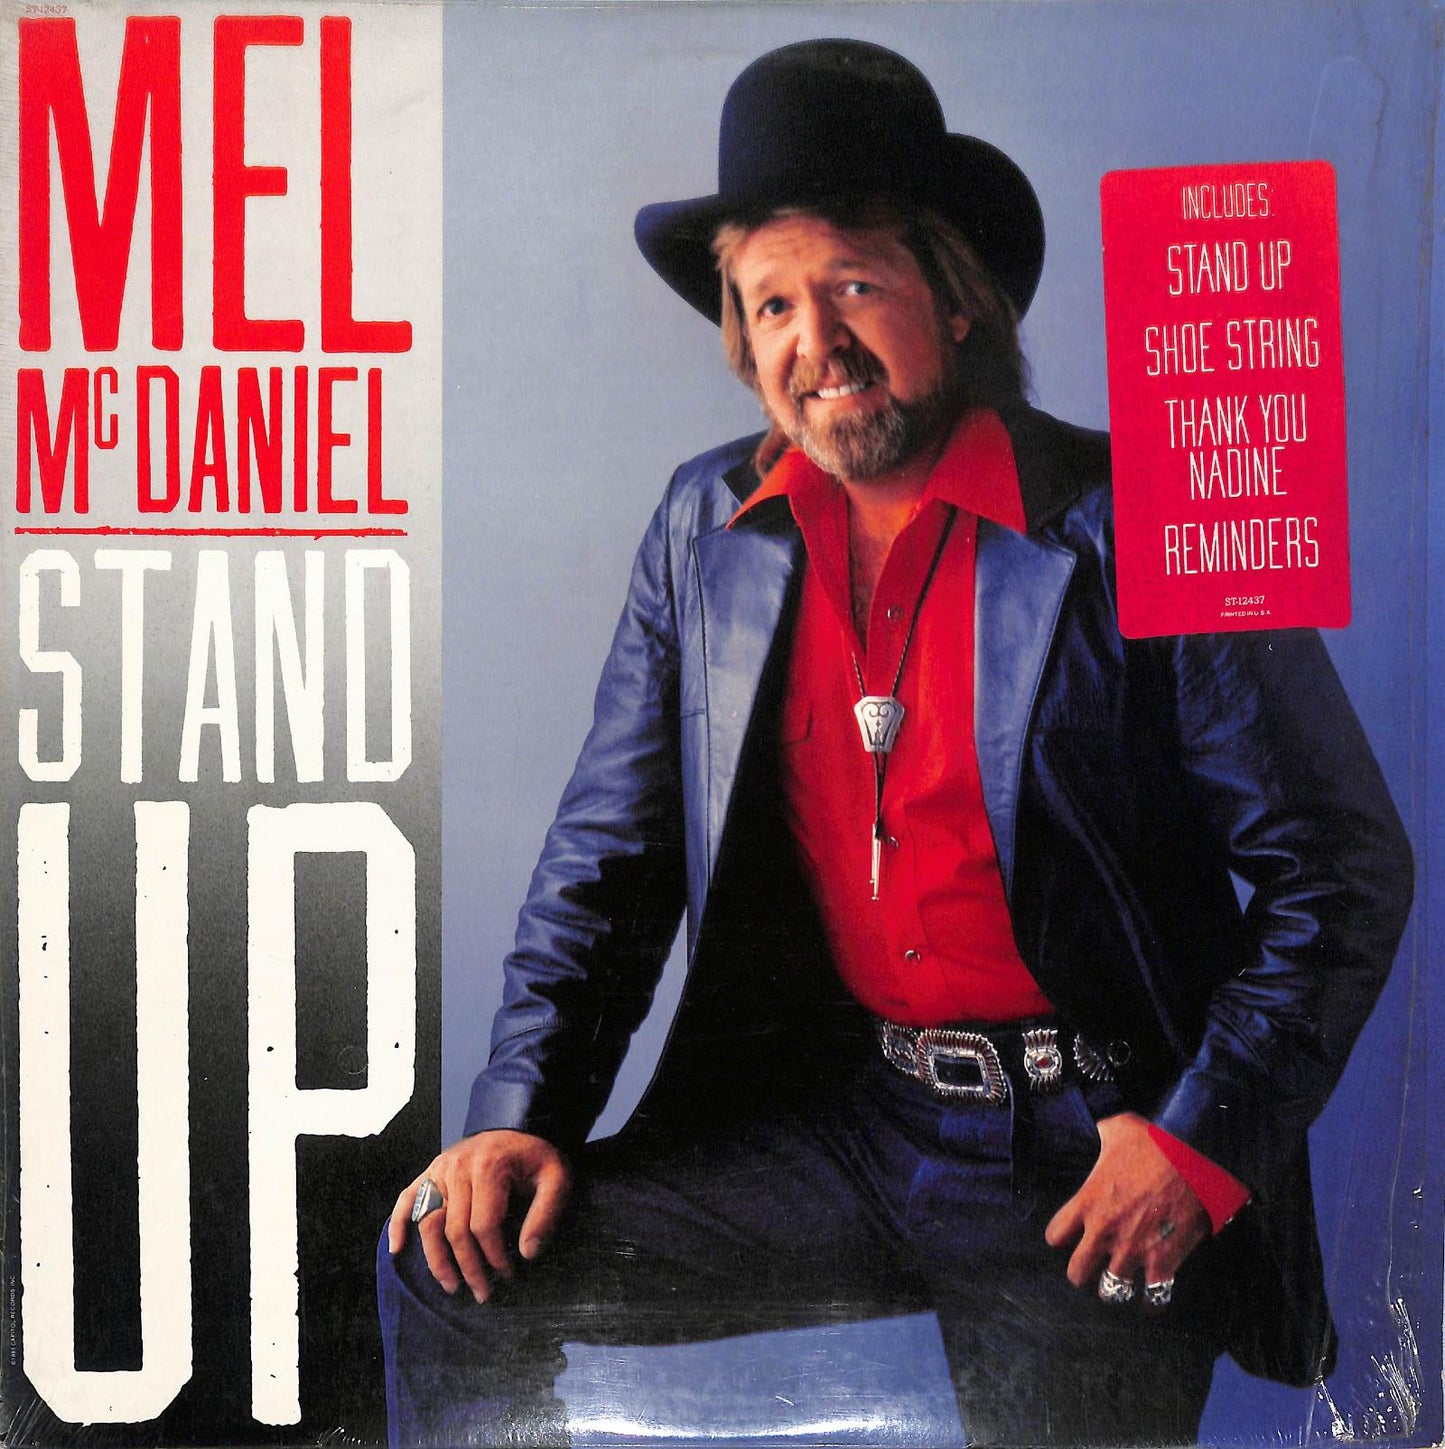 MEL MCDANIEL - Stand Up